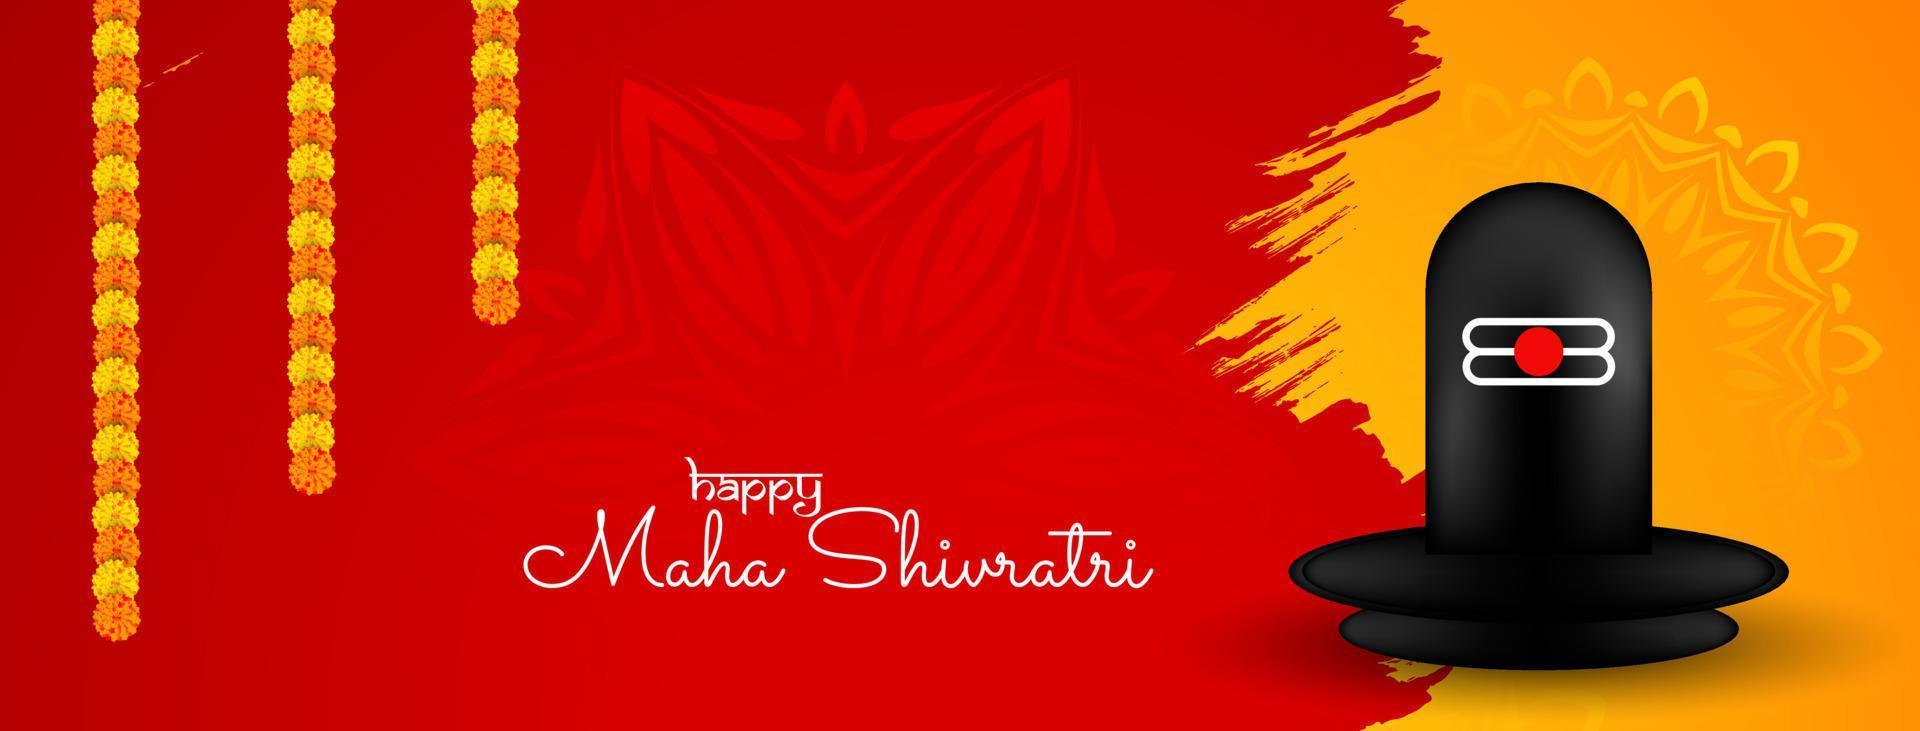 Happy Maha Shivratri Banner-Design vektor